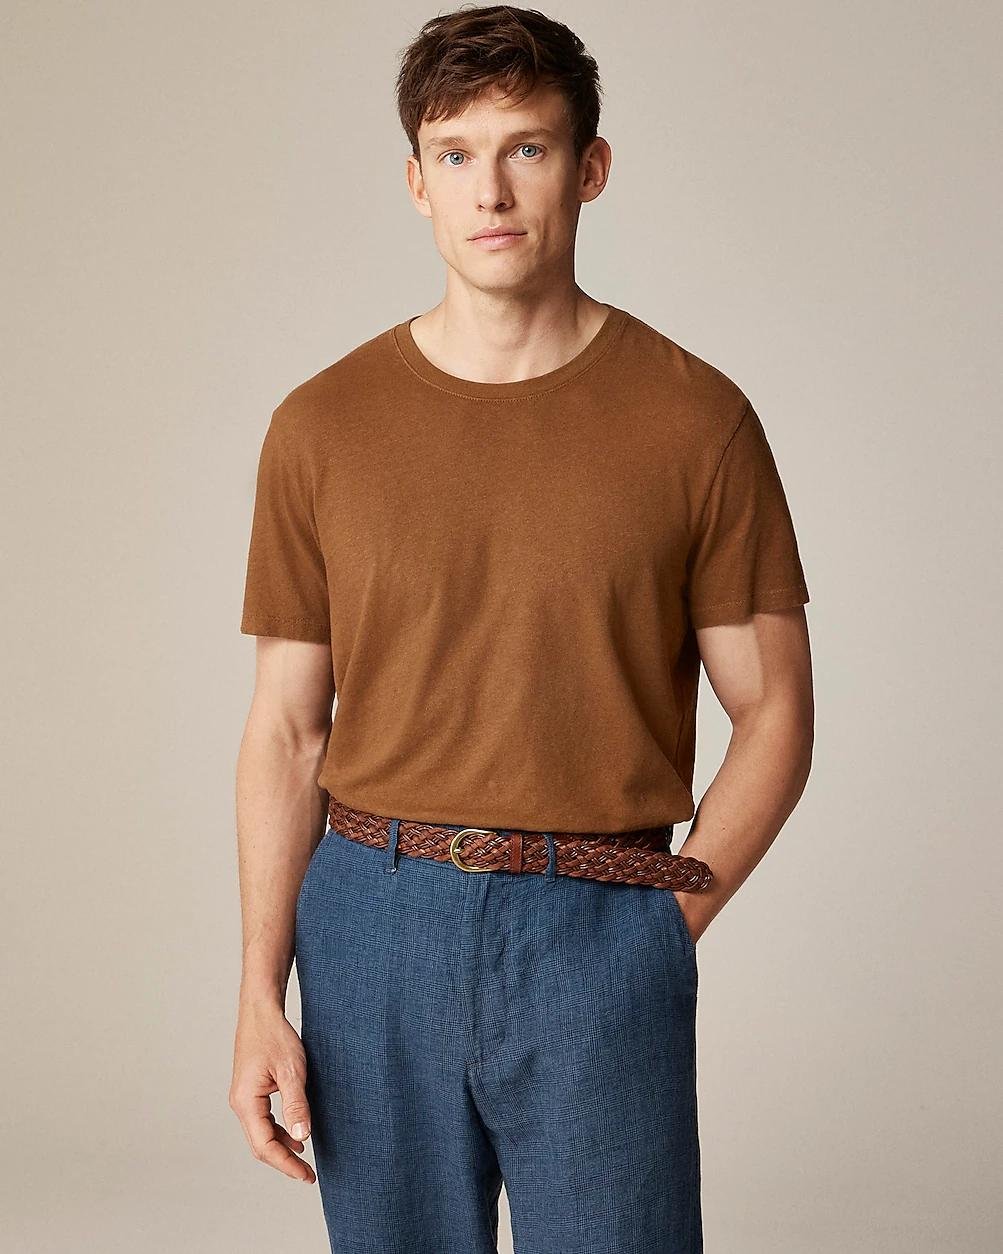 Tall hemp-organic cotton blend T-shirt by J.CREW